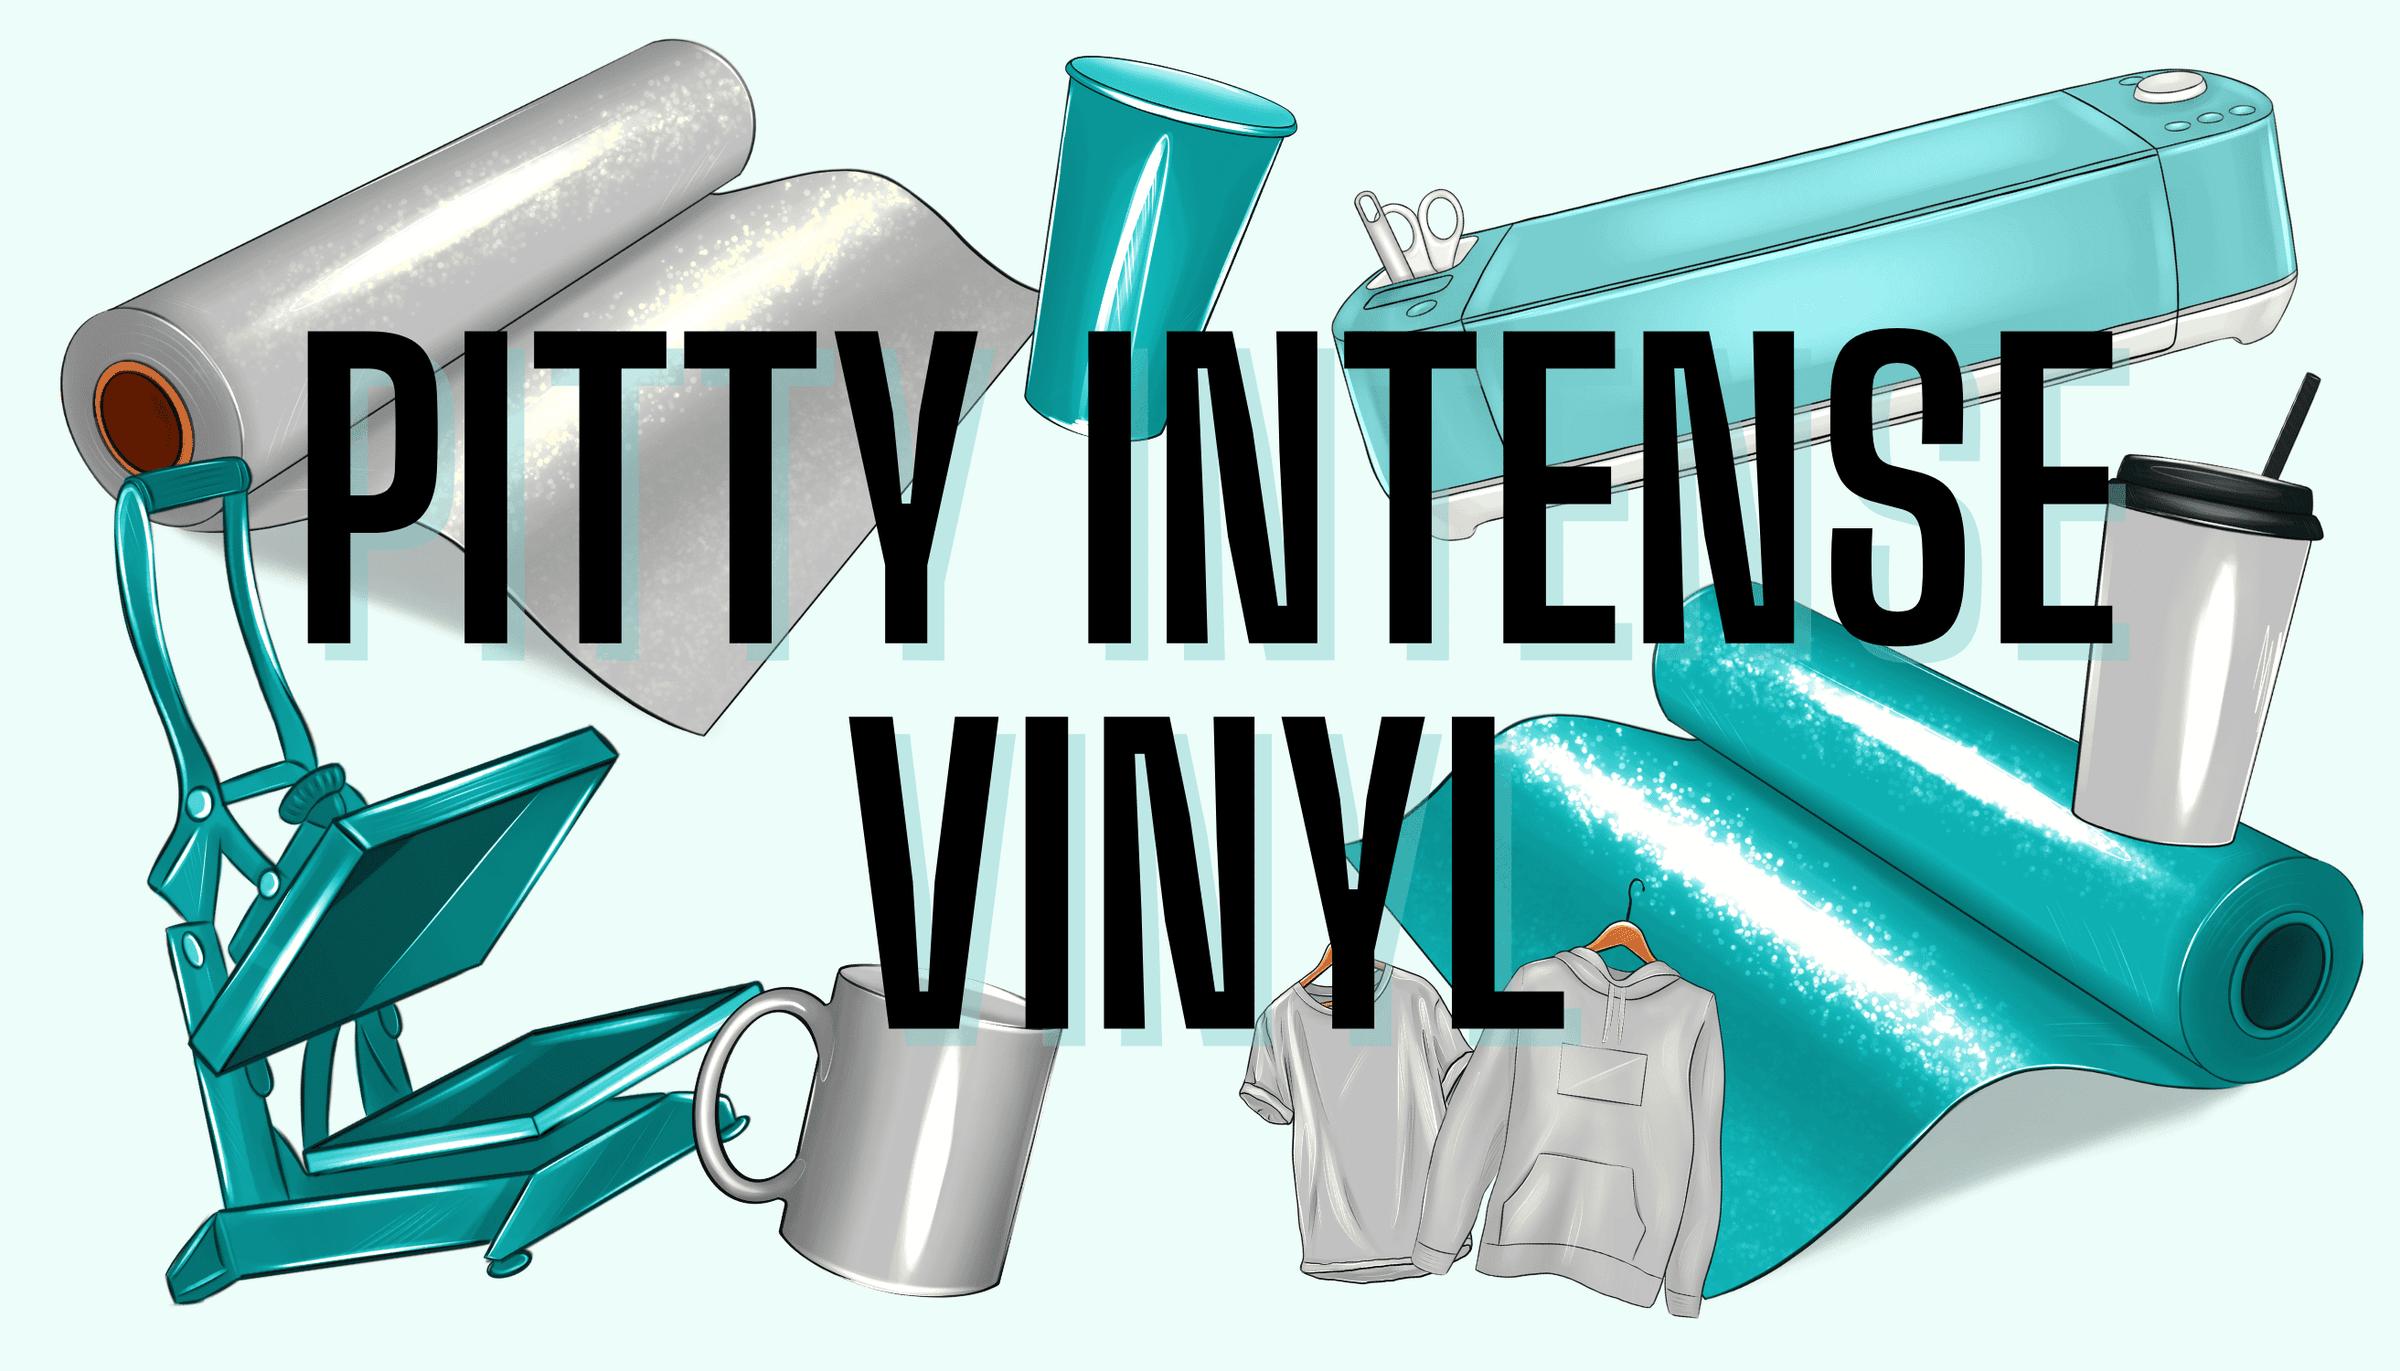 Puff HTV – Pitty Intense Vinyl